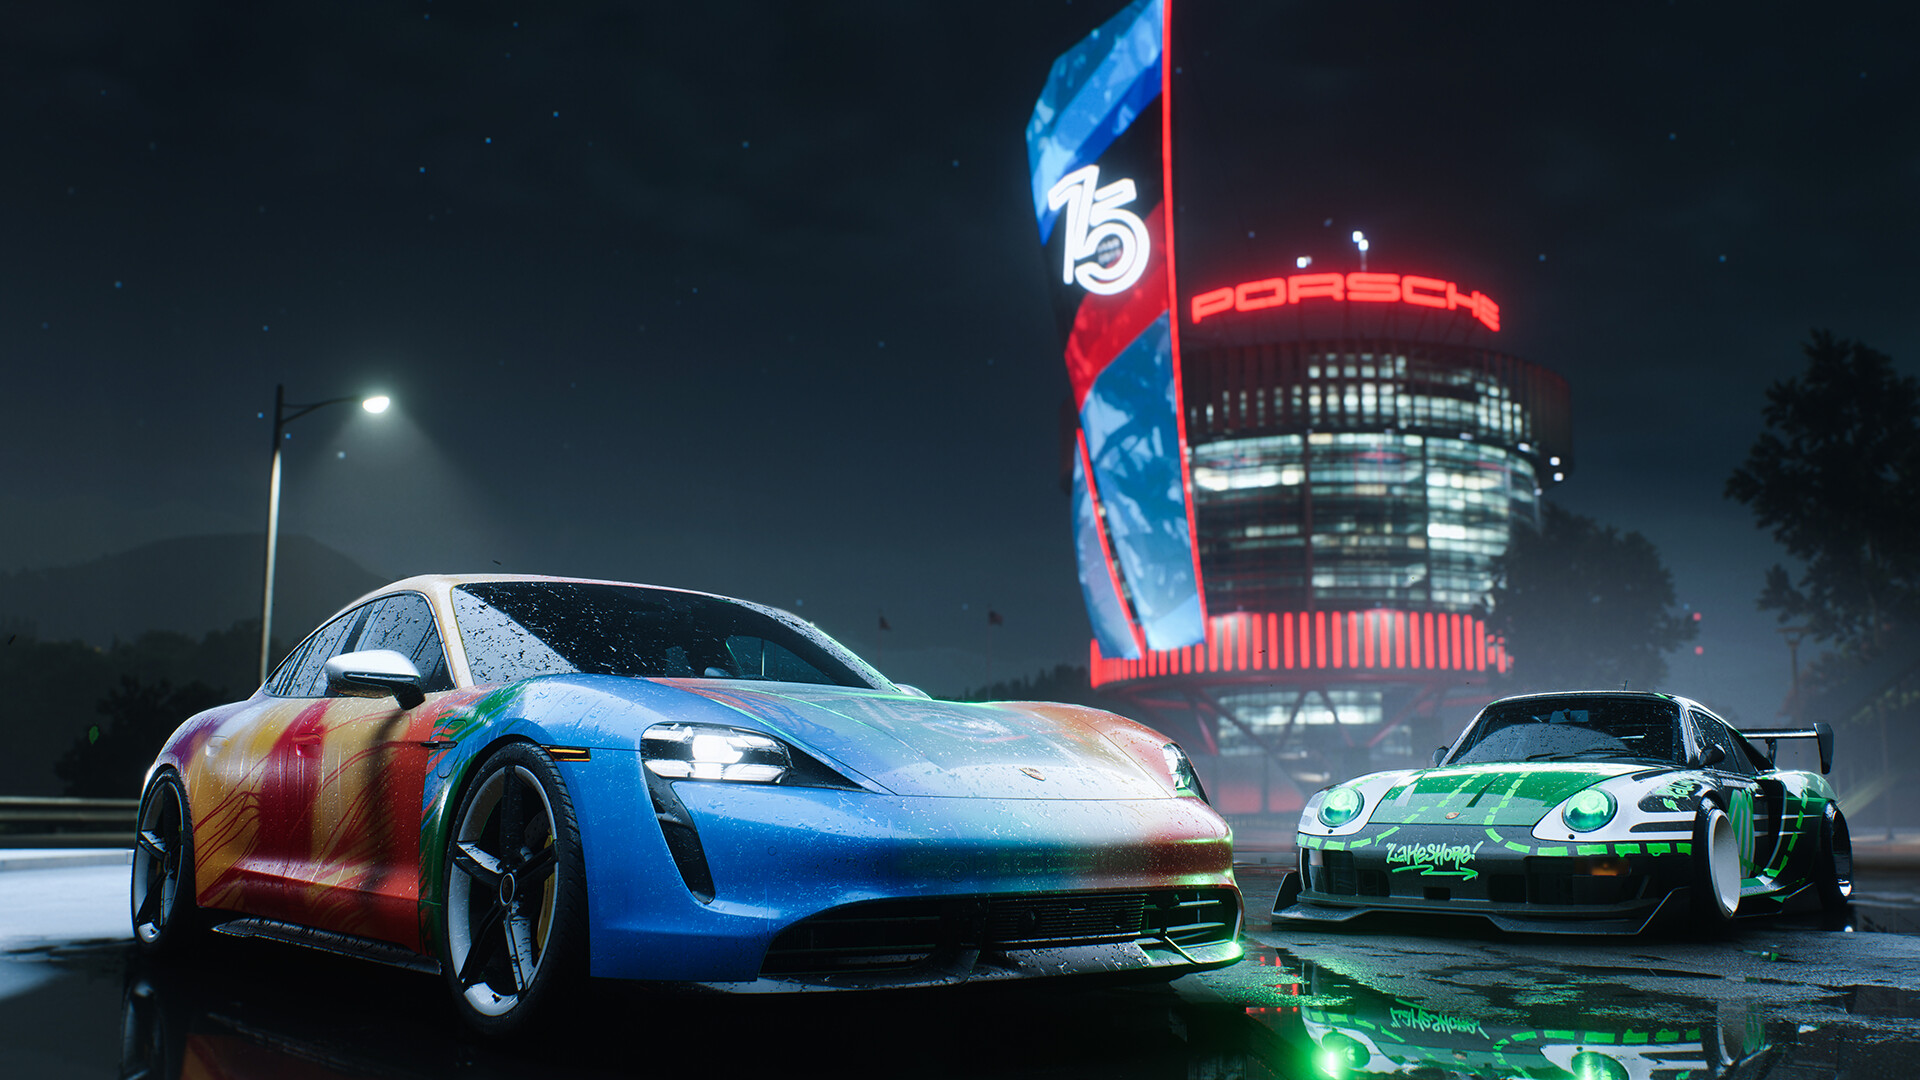 Buy Need for Speed, PC - EA Origin